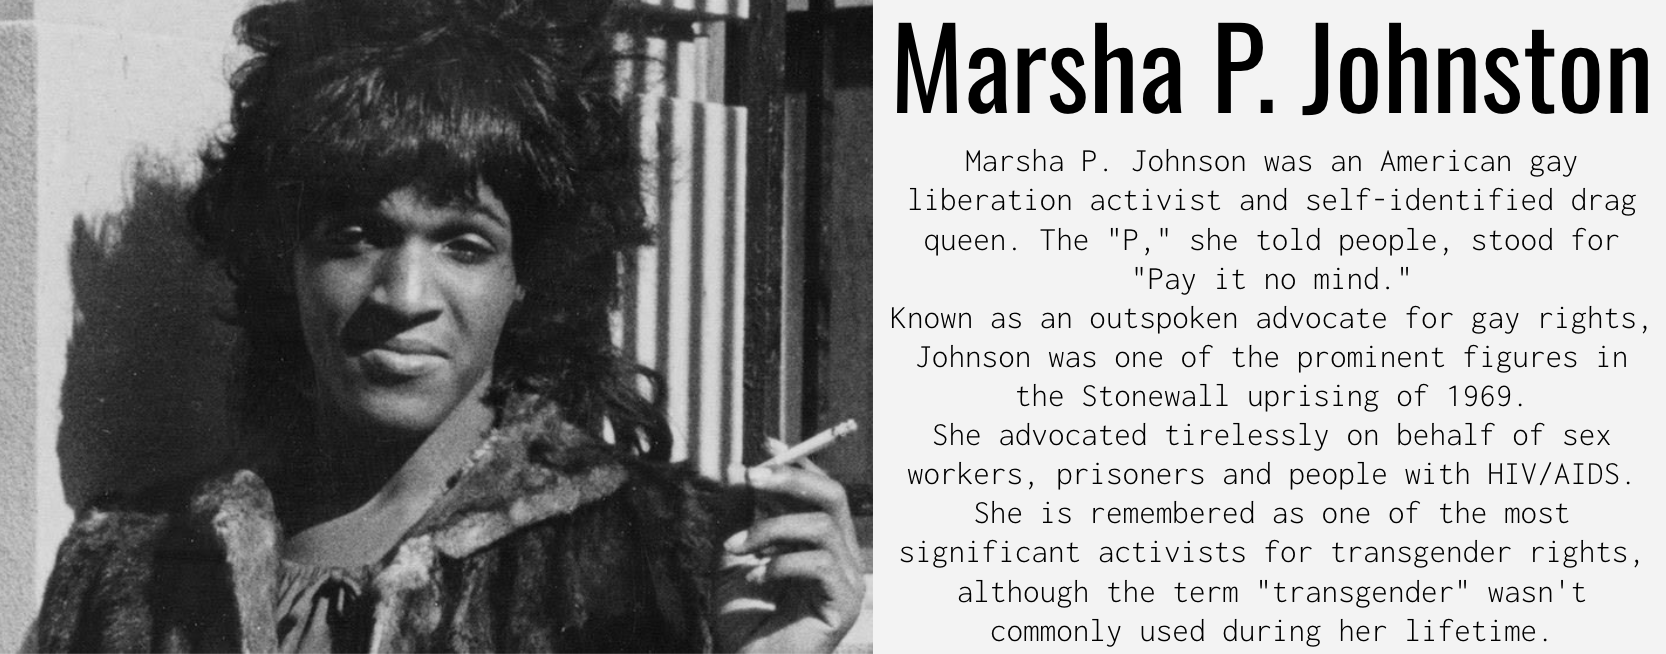 Marsha P. Johnston